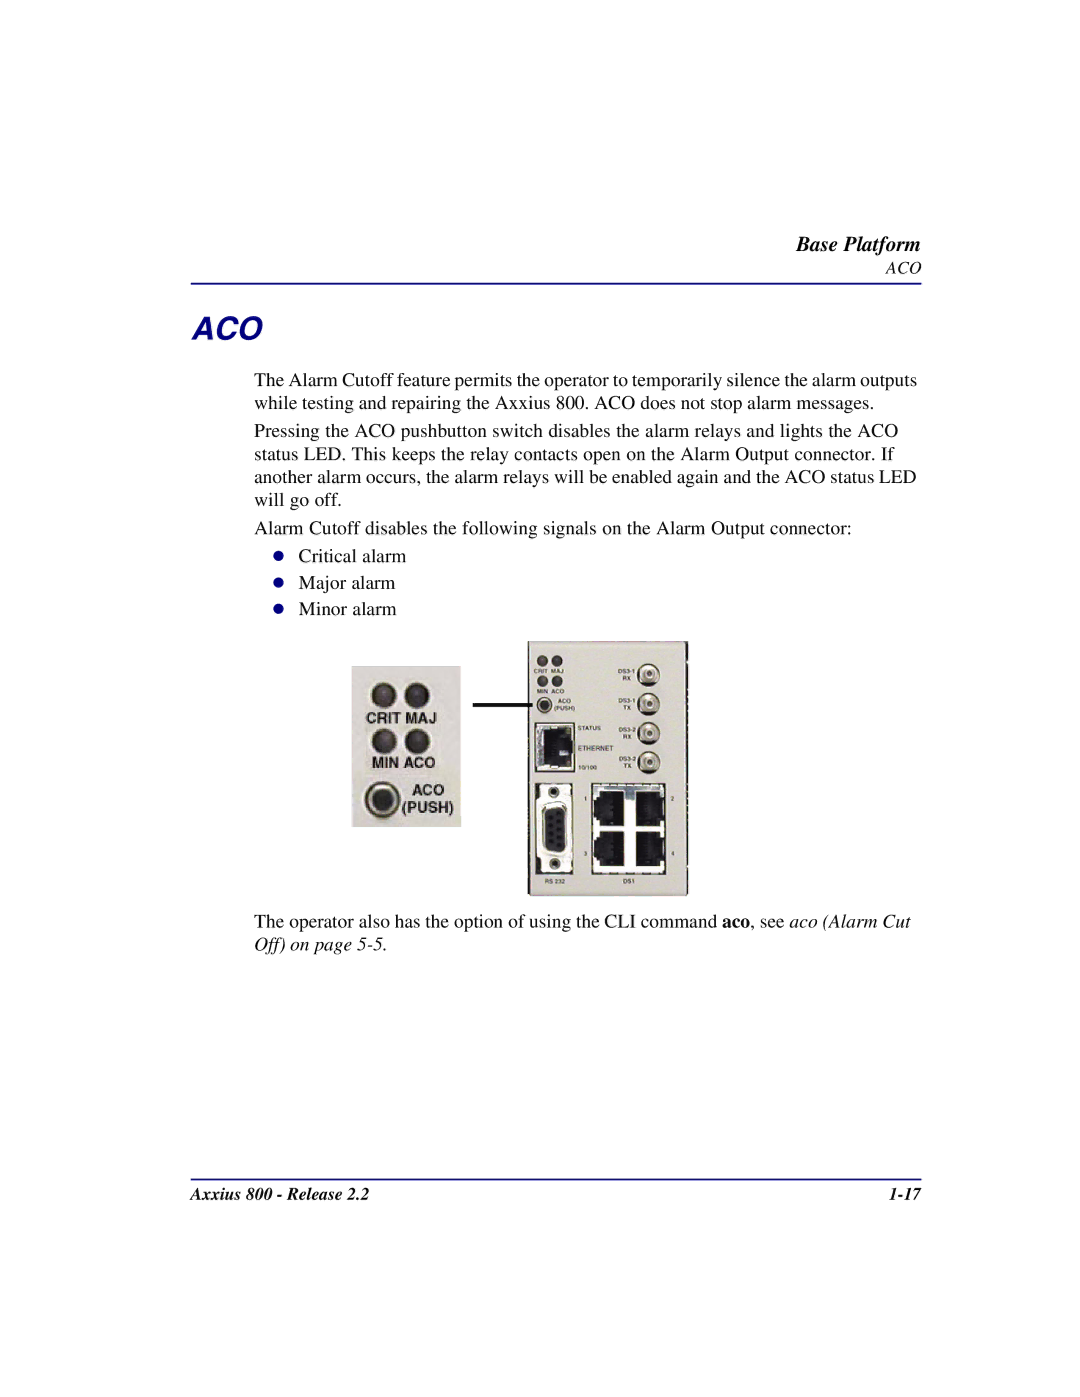 Carrier Access Axxius 800 user manual Aco 